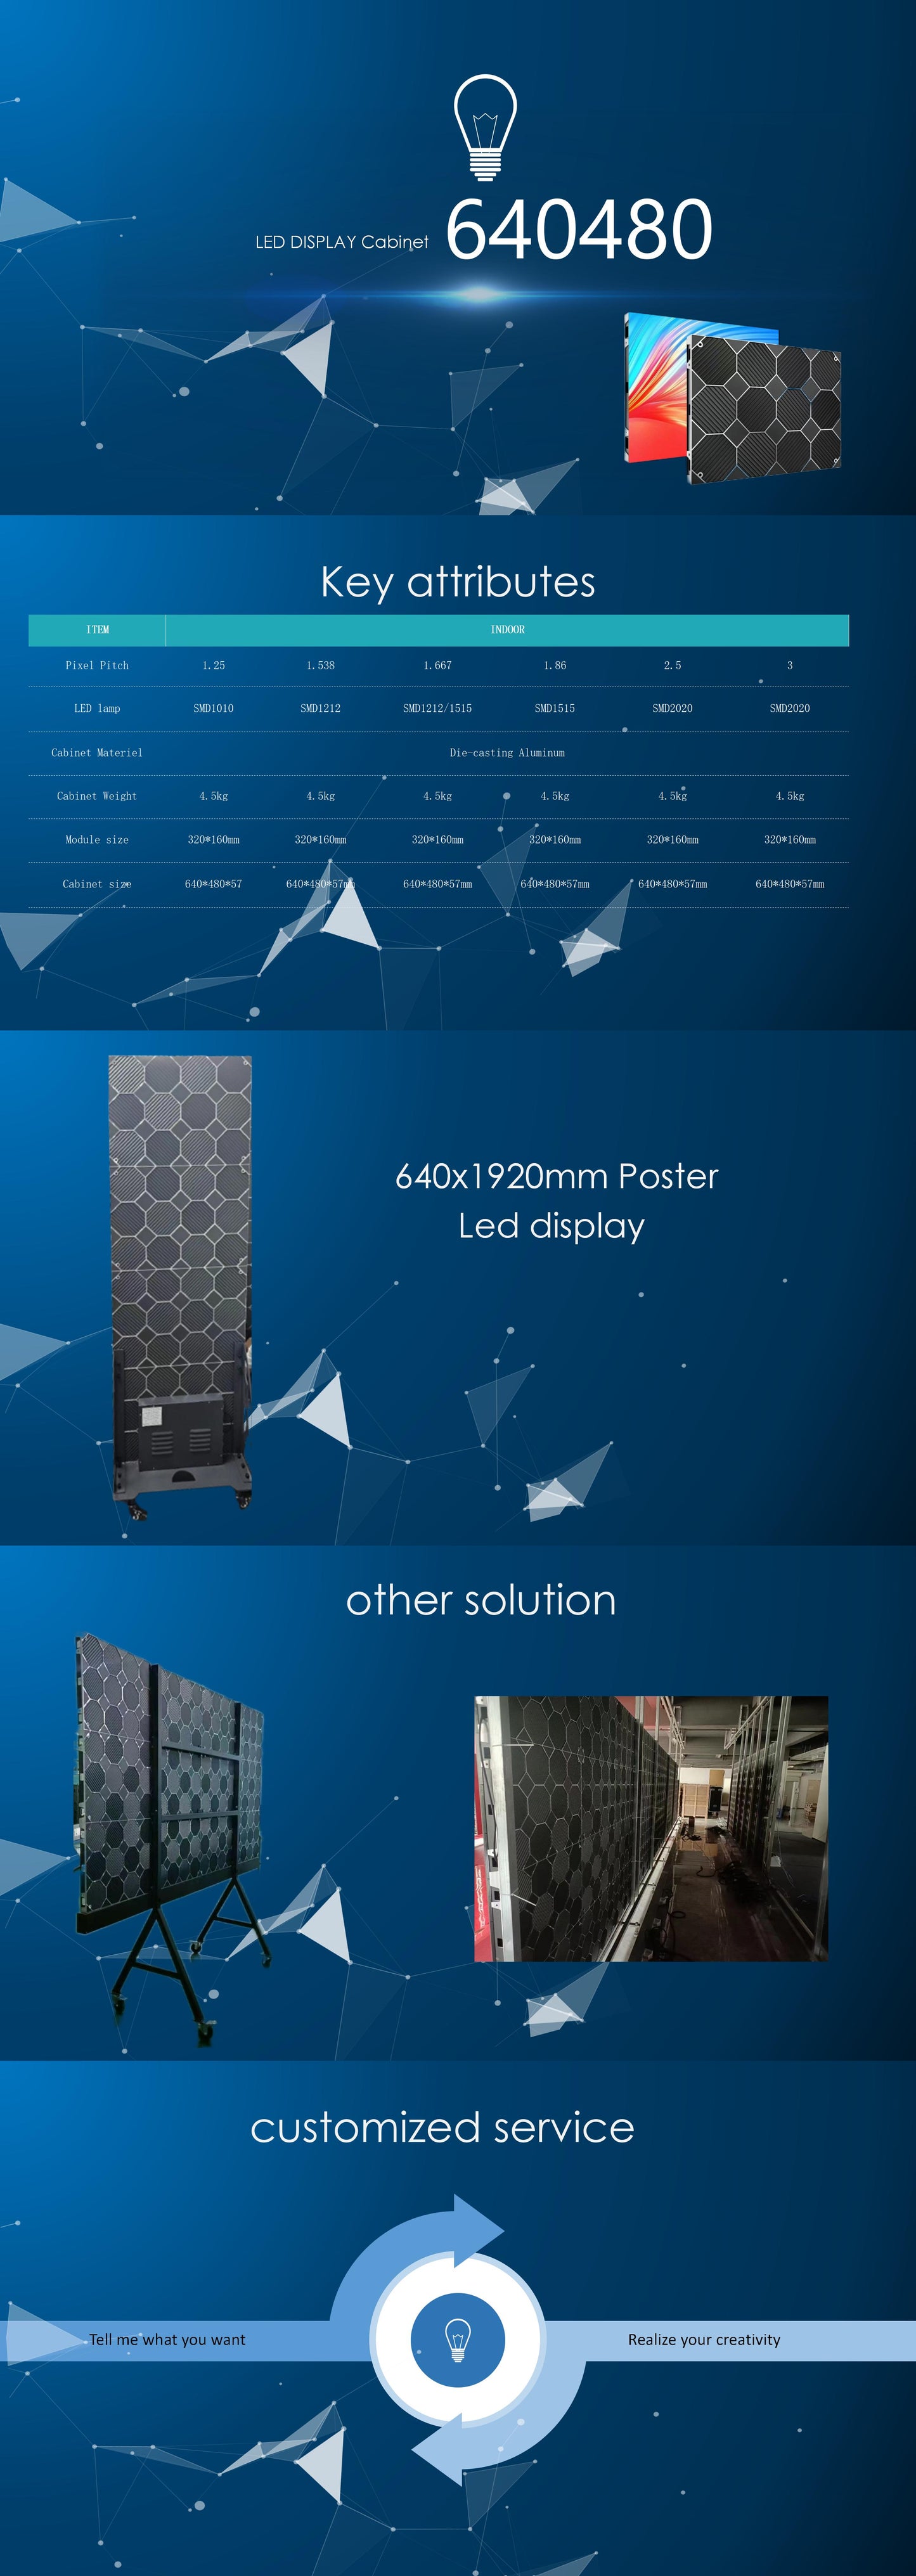 640*480 mm Die-Cast Cabinet for mini LED Display P1. 25 P1. 53 P1. 667 P1.86 P2.0 P2.5